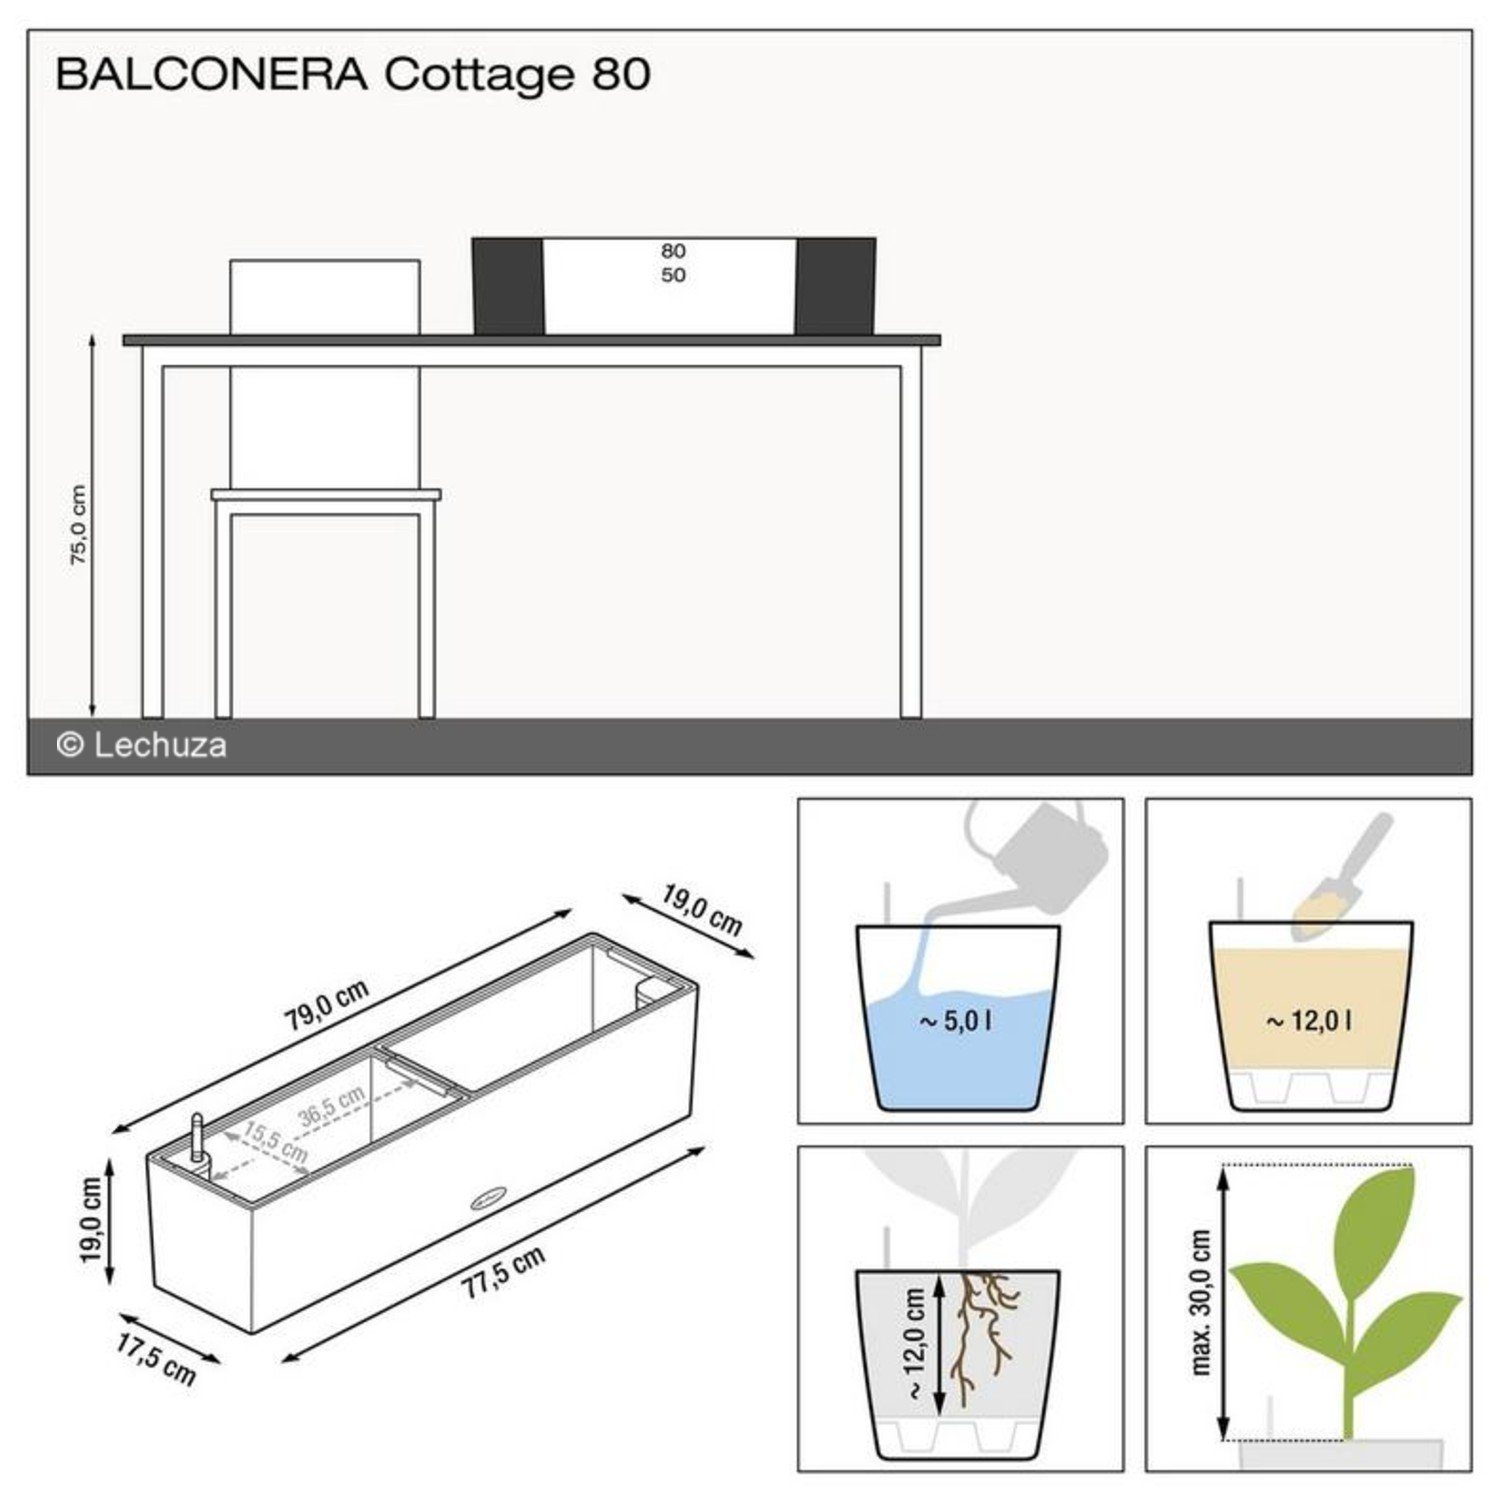 80 Balkonkasten Balconera Cottage Lechuza® Balkonkasten graphitschwarz